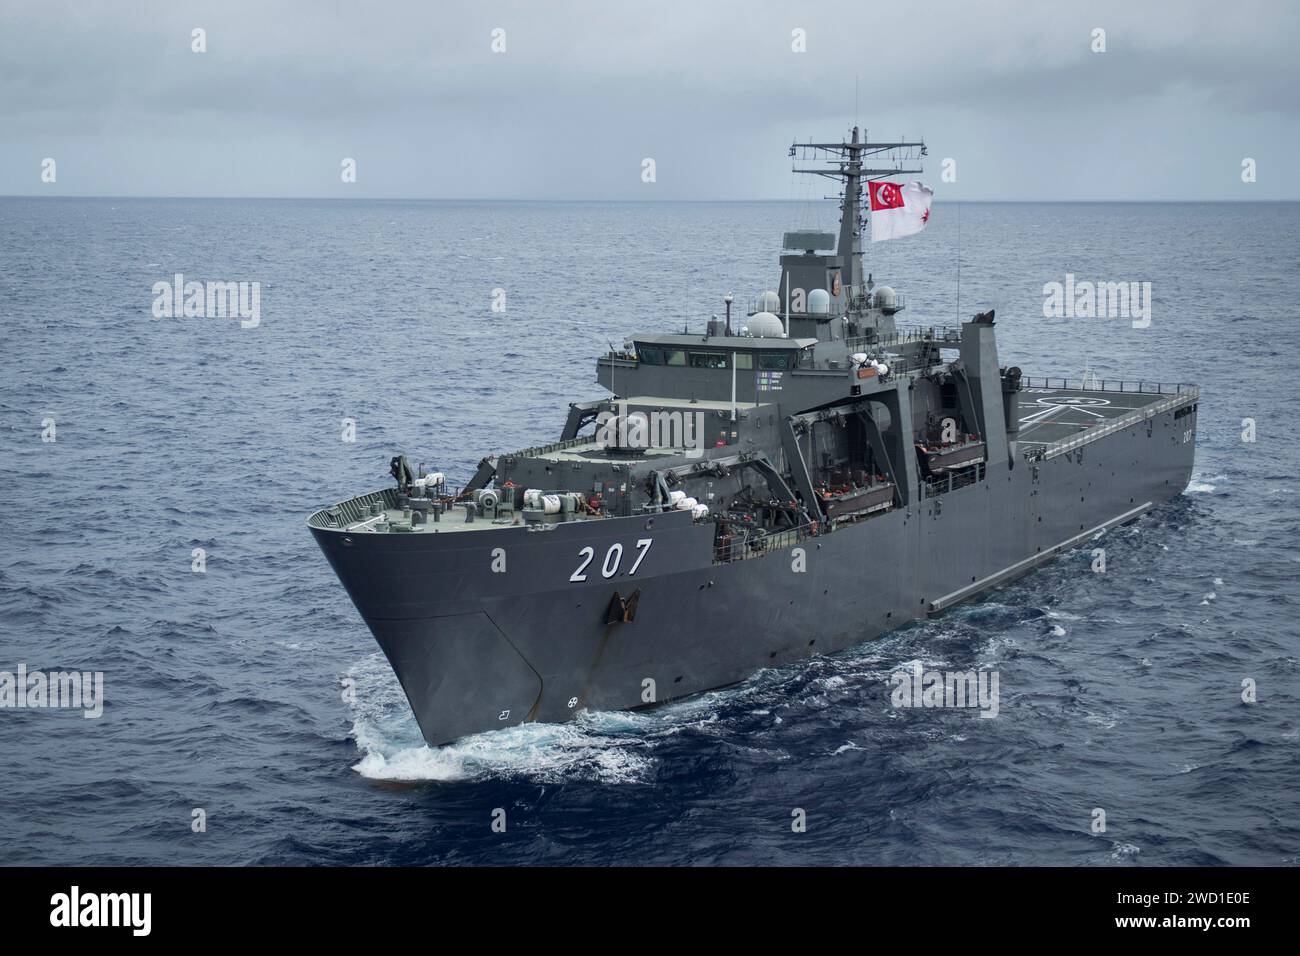 Republic of Singapore Navy's landing platform dock ship RSS Endurance in the Pacific Ocean. Stock Photo